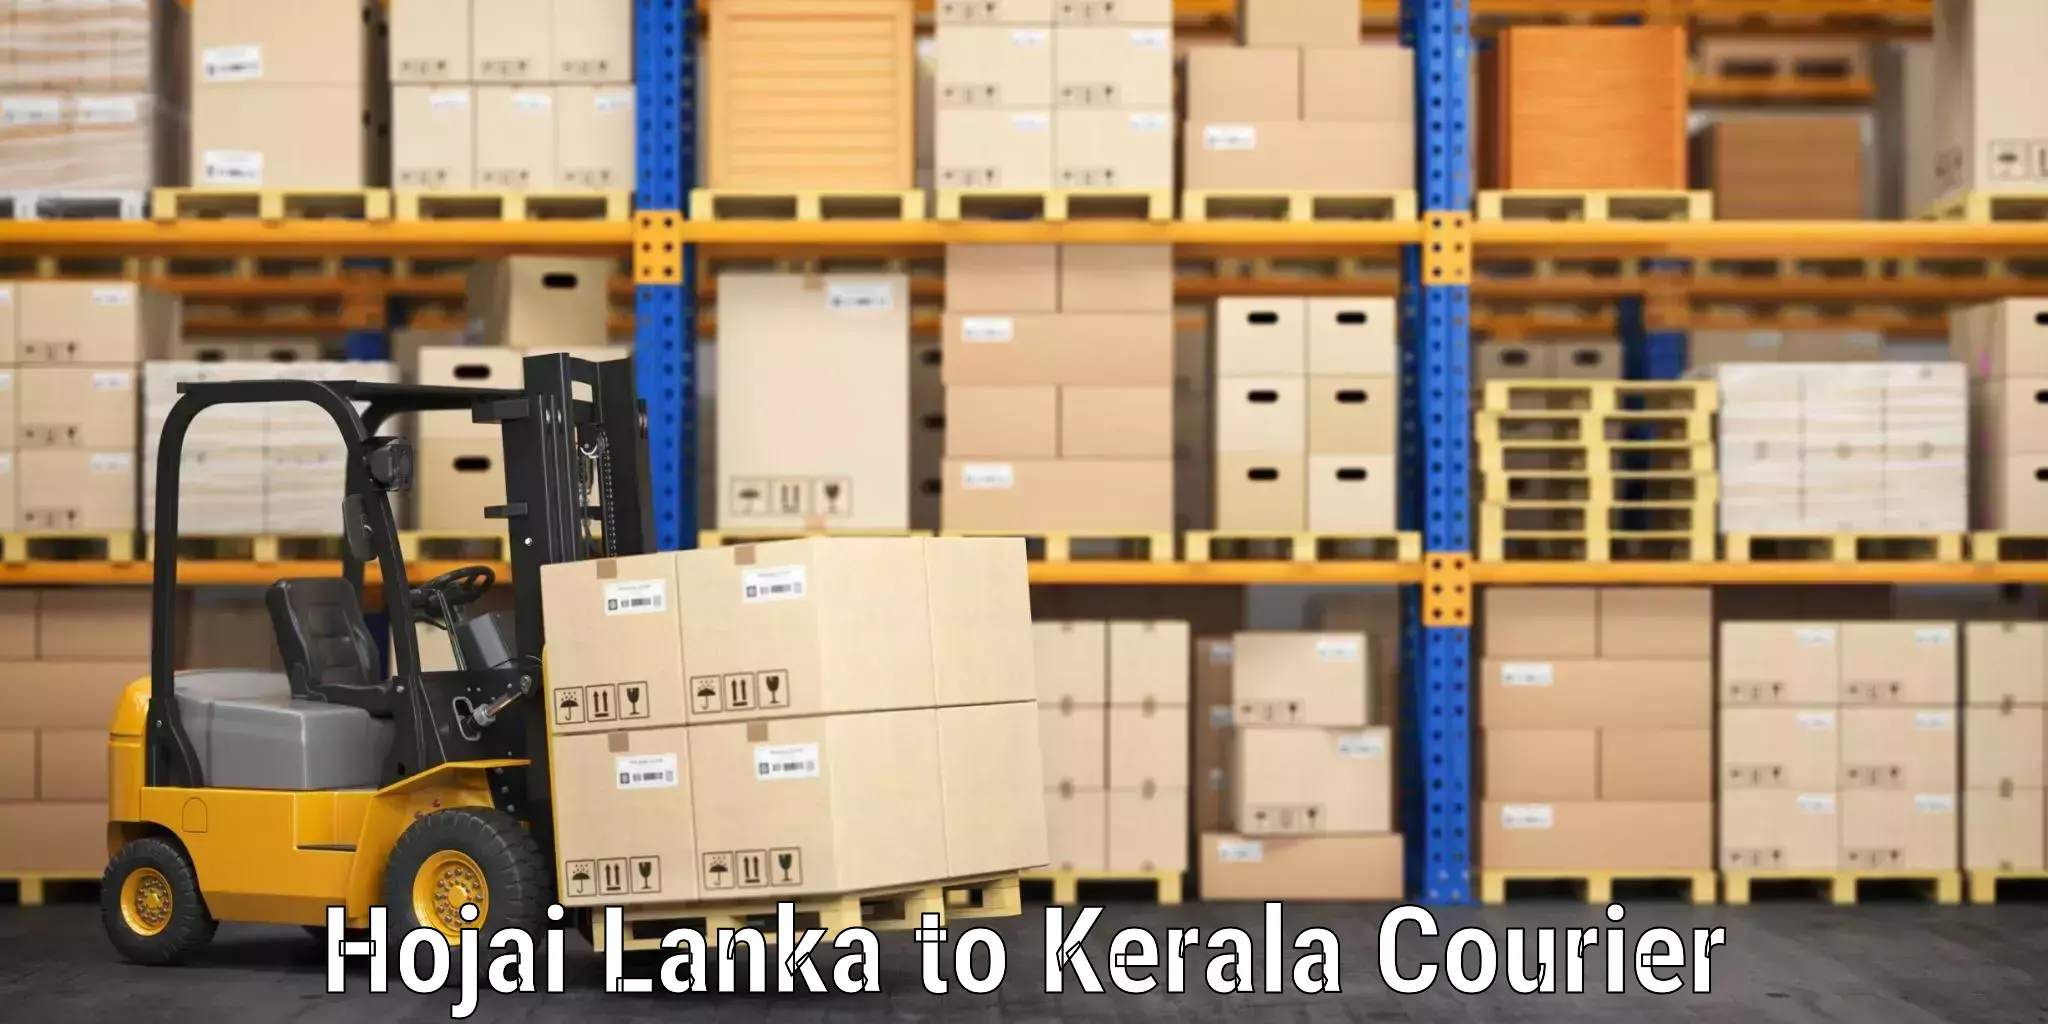 Luggage transport solutions Hojai Lanka to Puthukkad